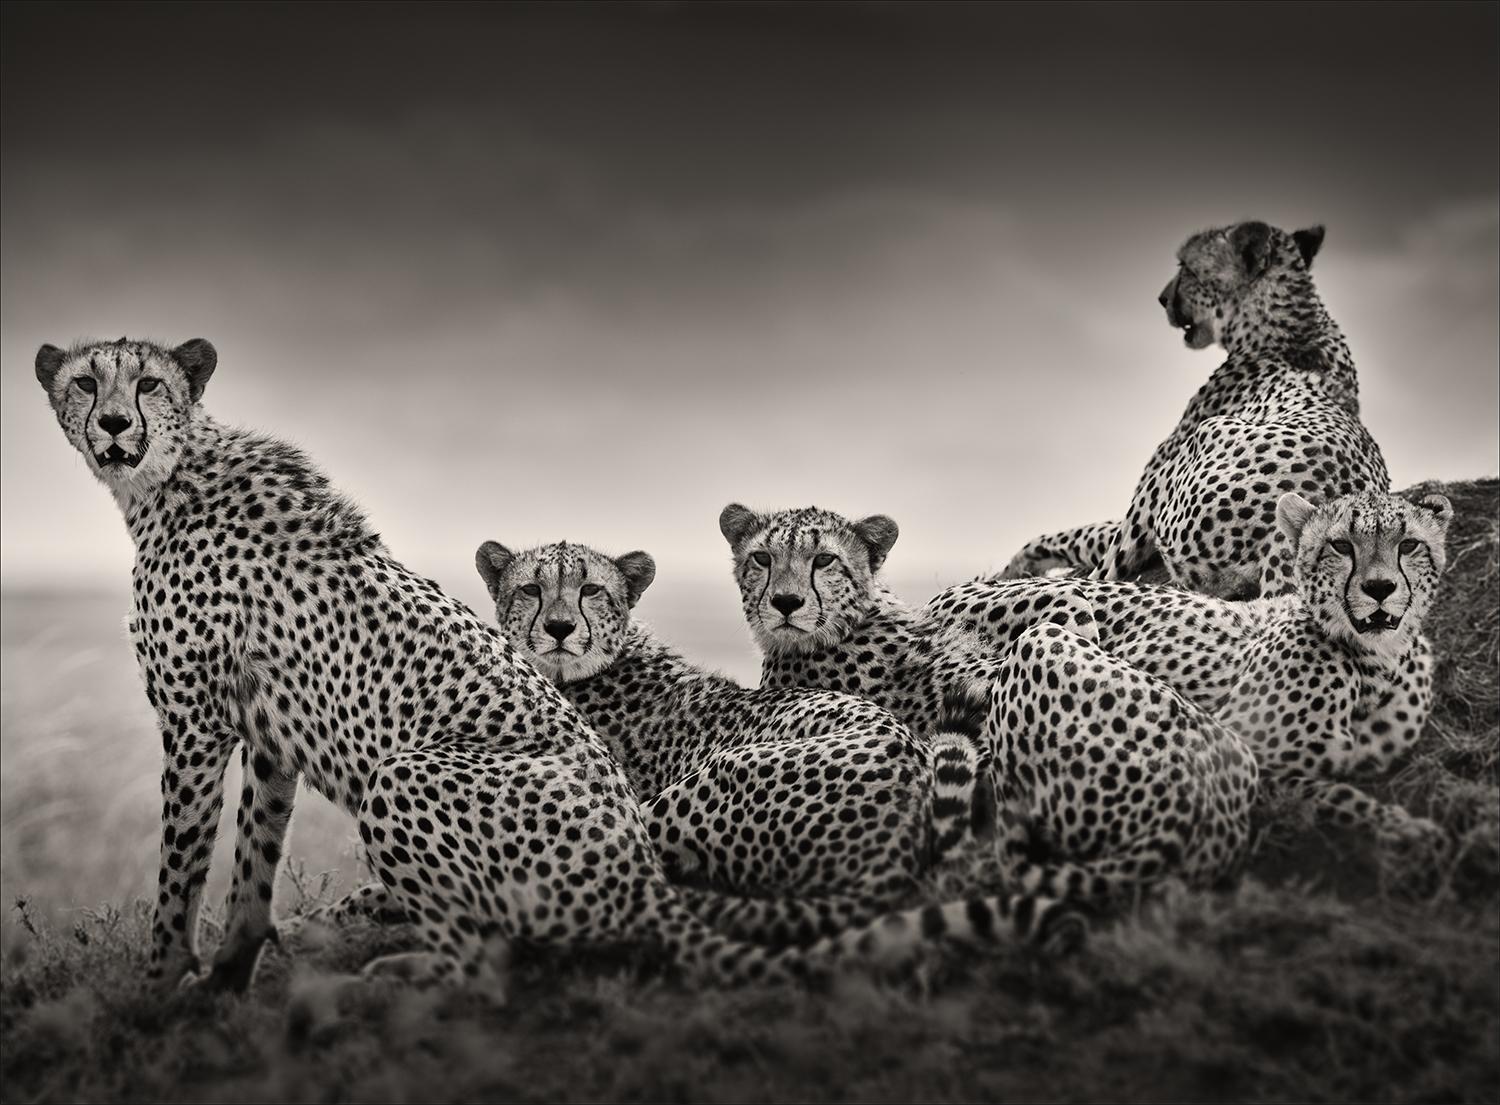 Joachim Schmeisser Black and White Photograph - Alliance I, animal, wildlife, black and white photography, cheetah